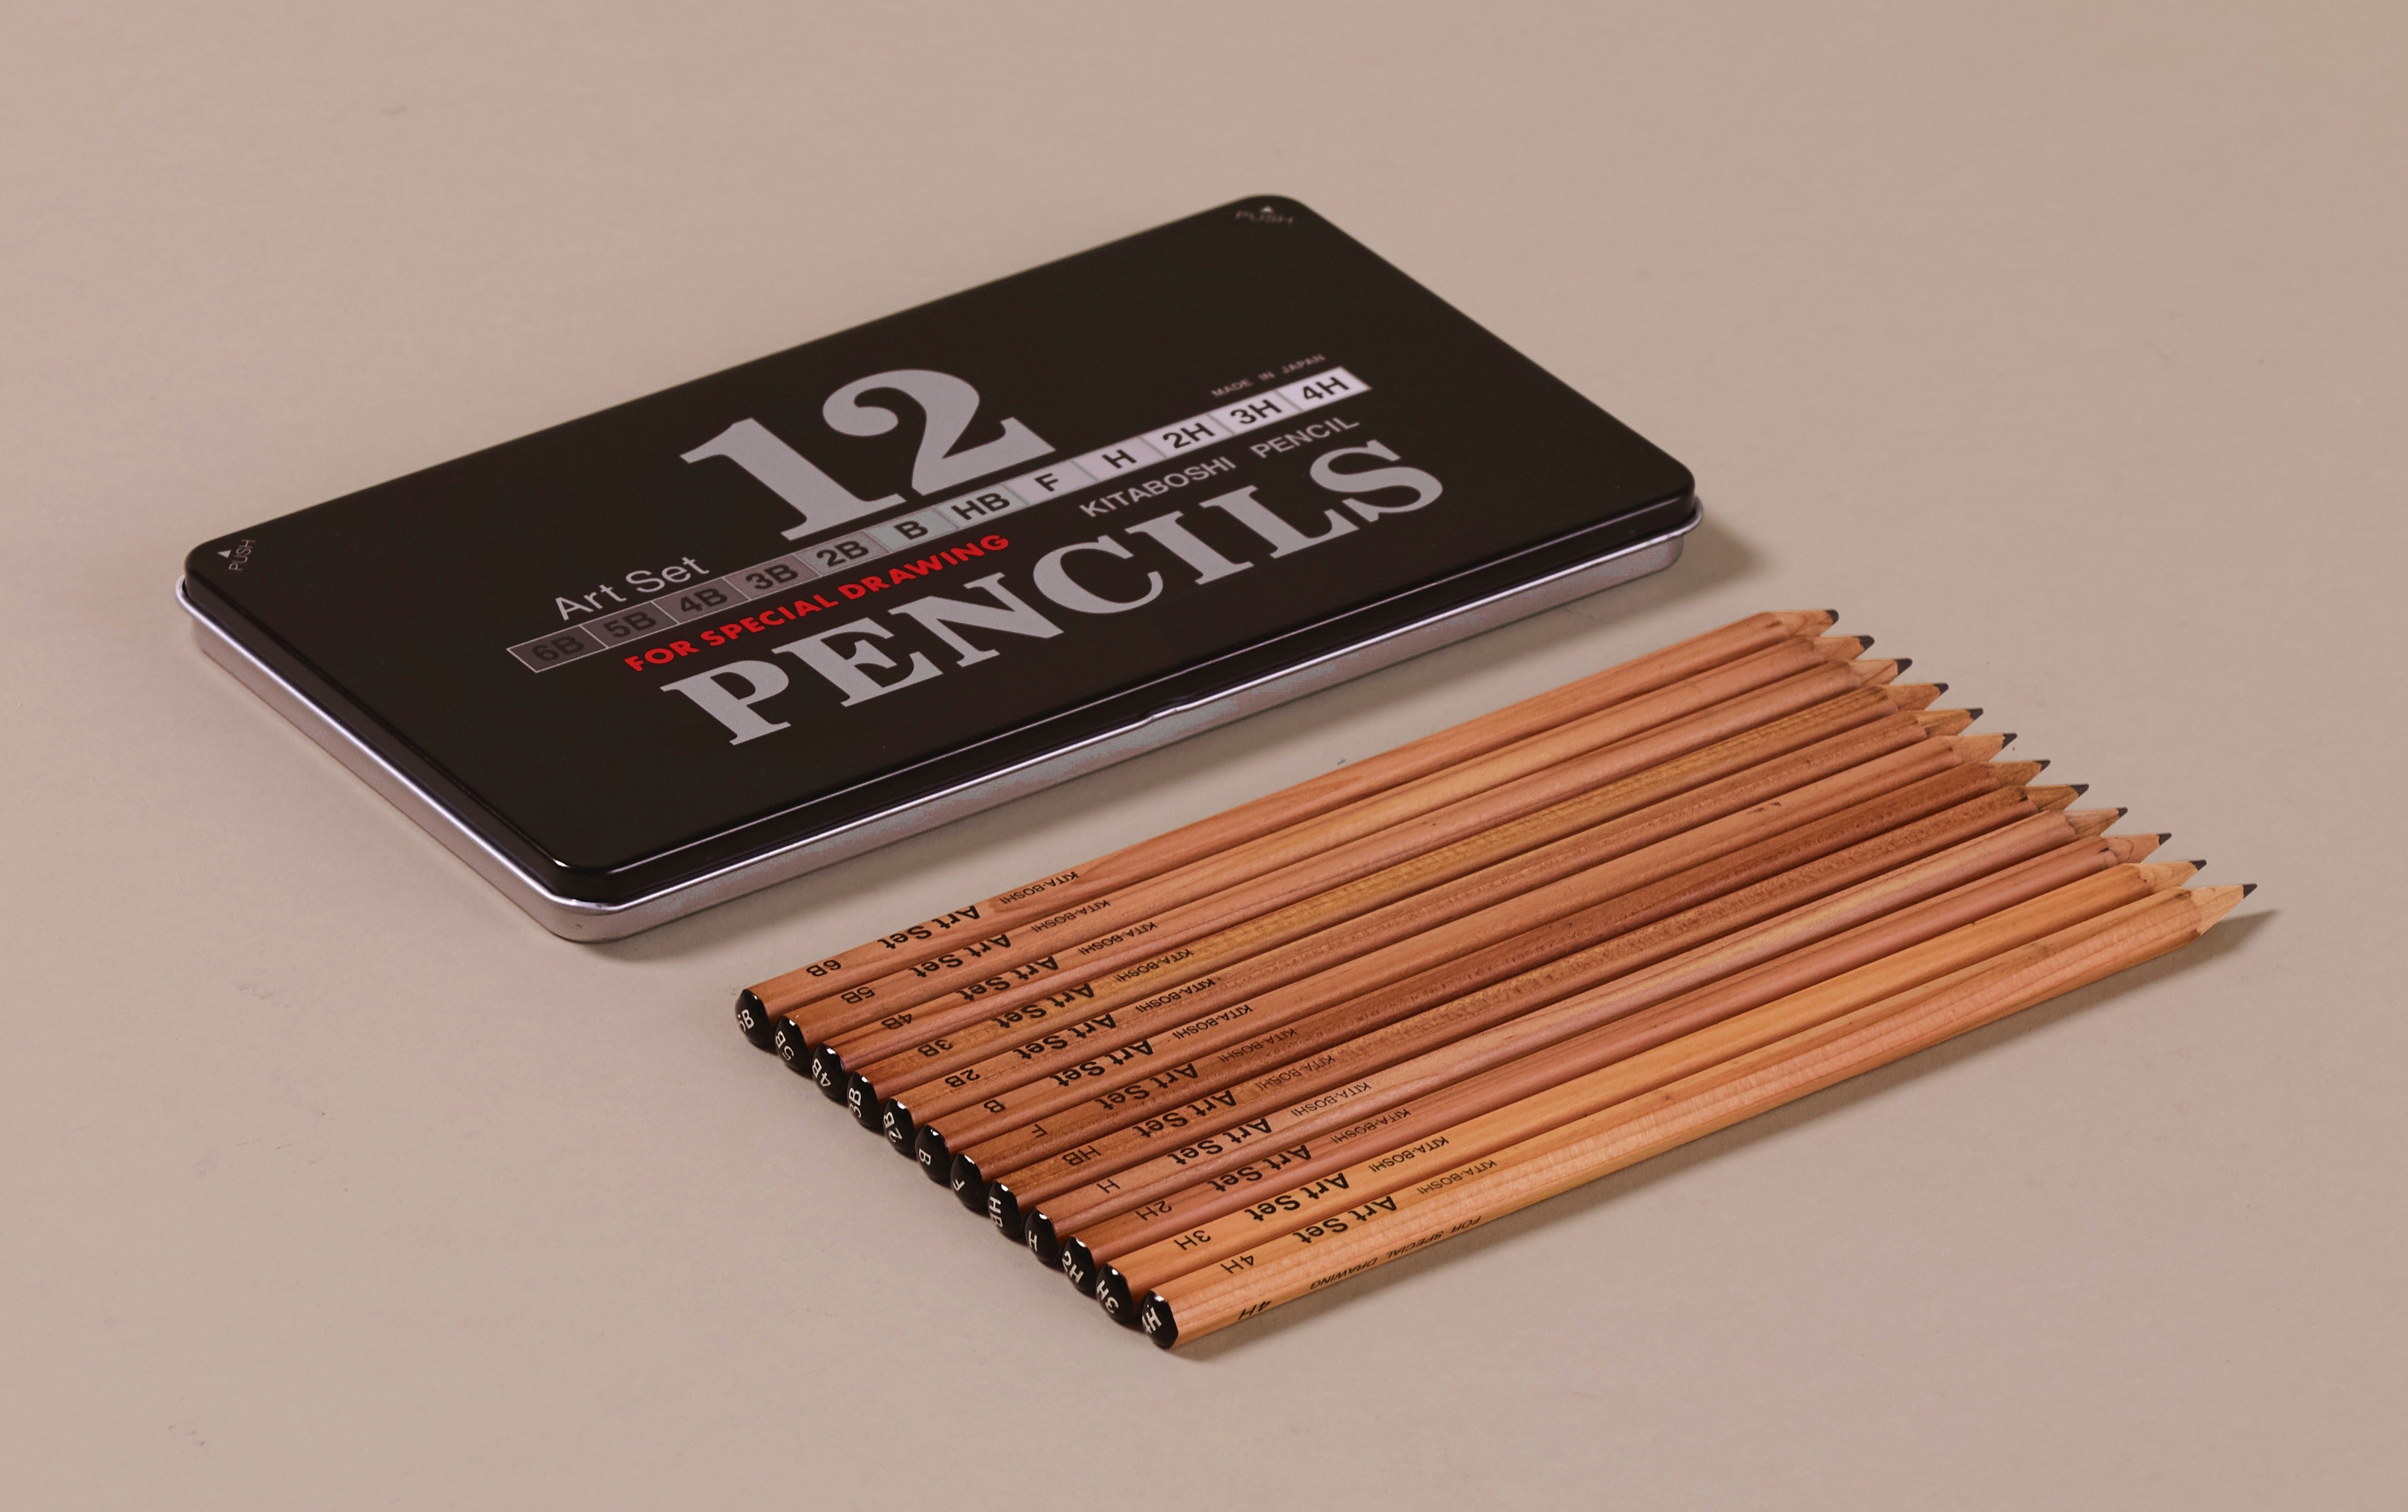 KITABOSHI 9900 Art Set of 12 Pencils 4H to 6B in a Metal Tin Made in Japan  